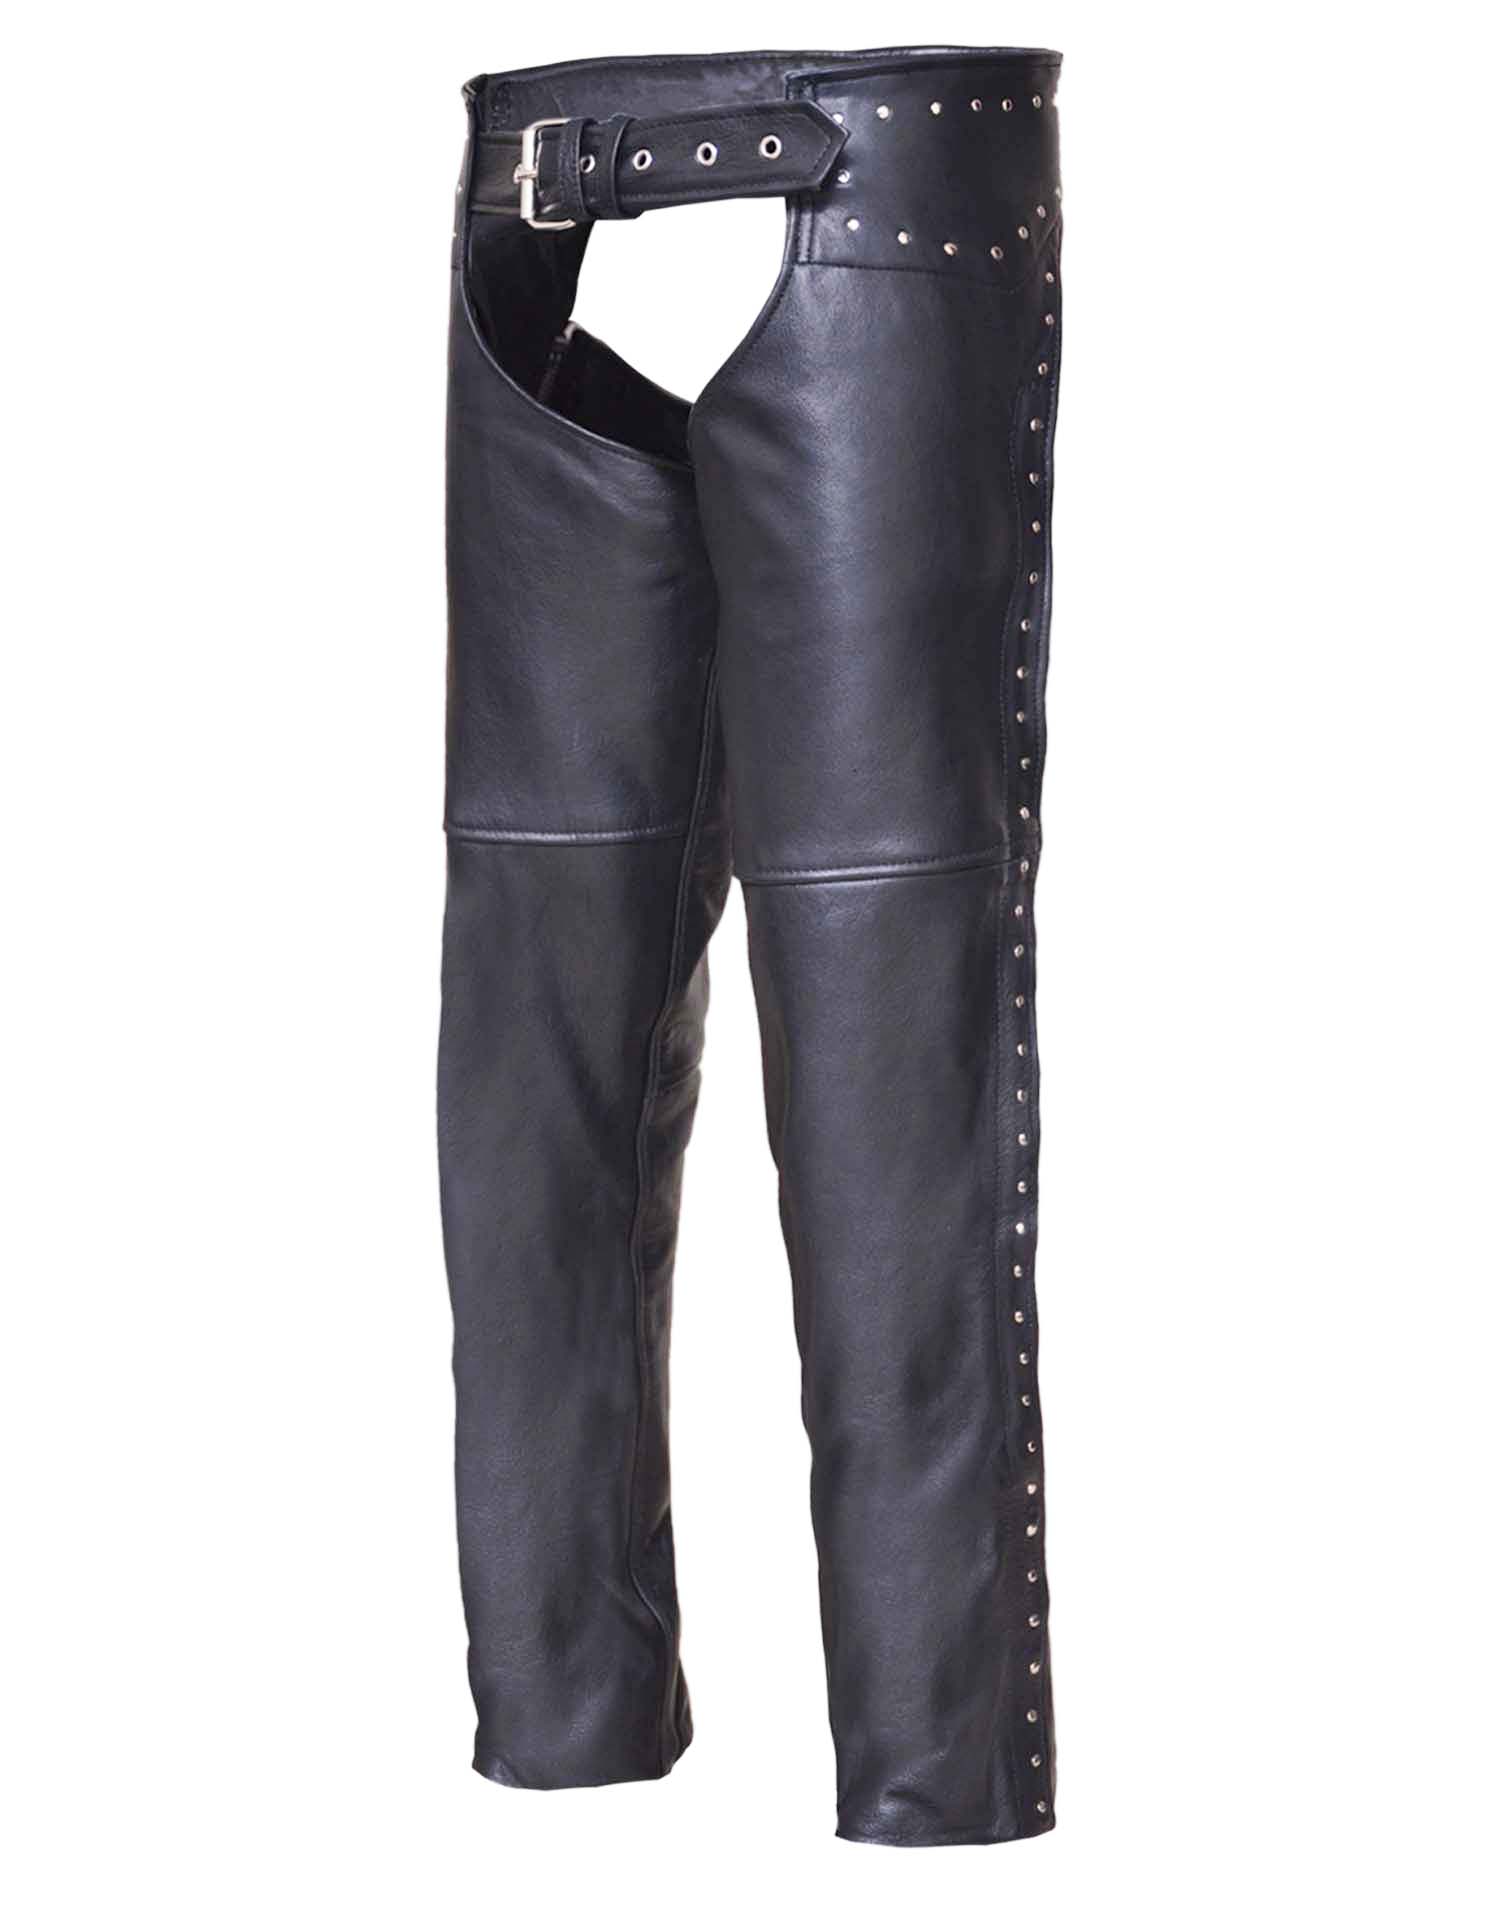 Ladies Low-Rise Premium Black Leather Chaps w/Studs (Size: 3X-Small)